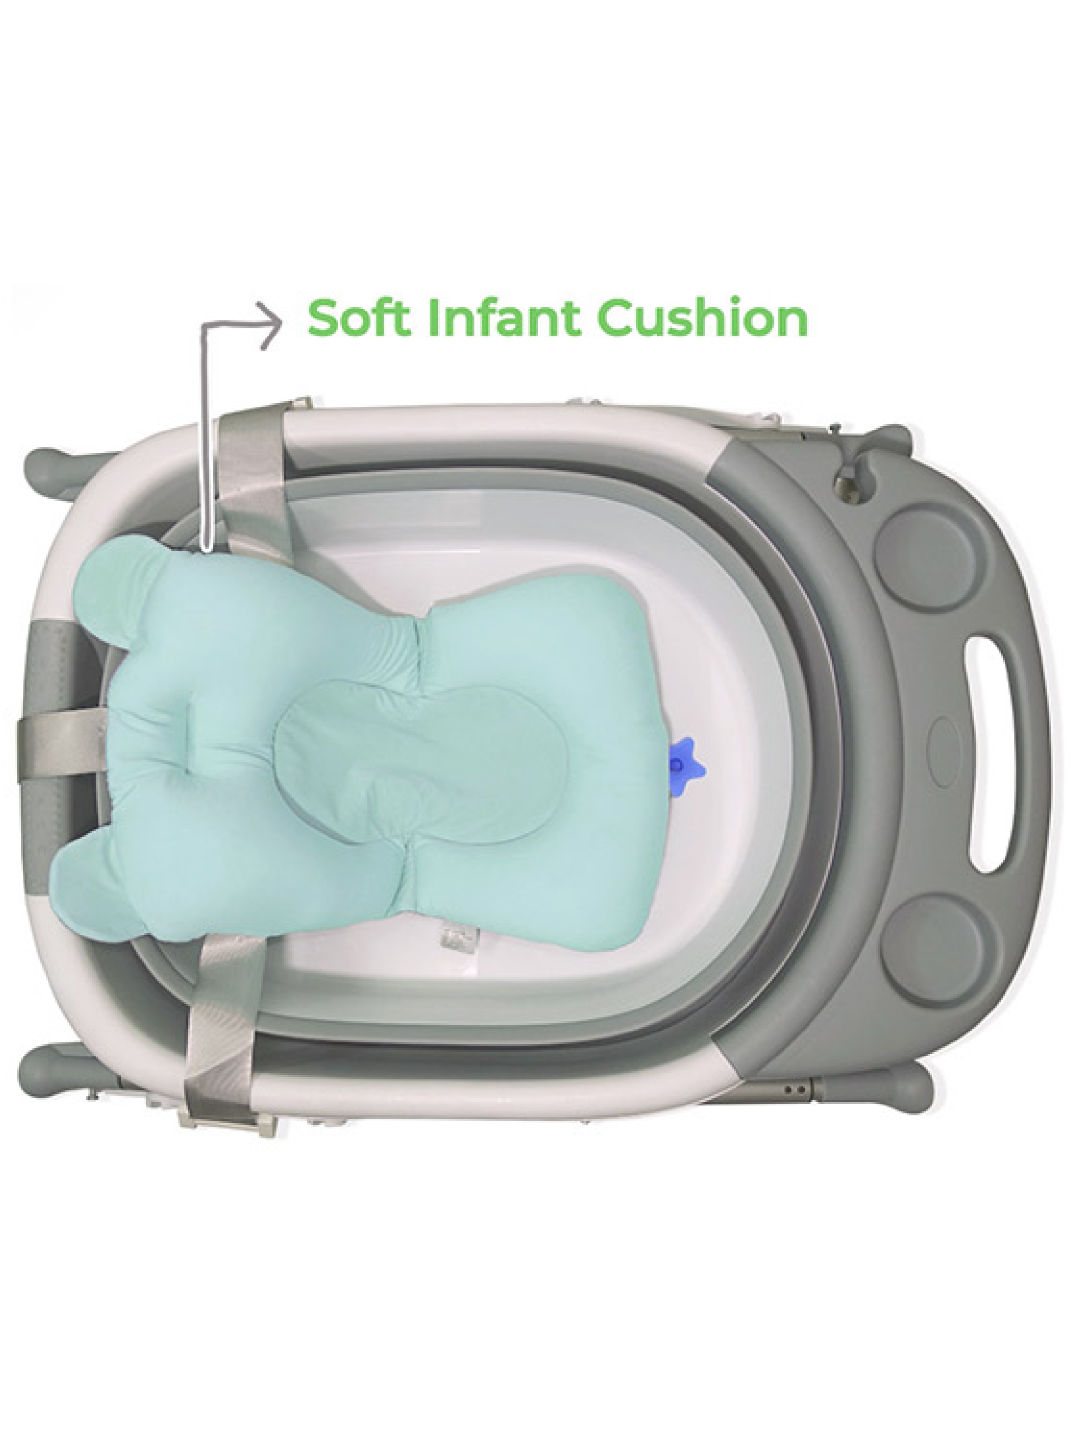 Nature to Nurture Nursery Splish Splash Triple Stage Collapsible Baby Tub (Mint- Image 4)